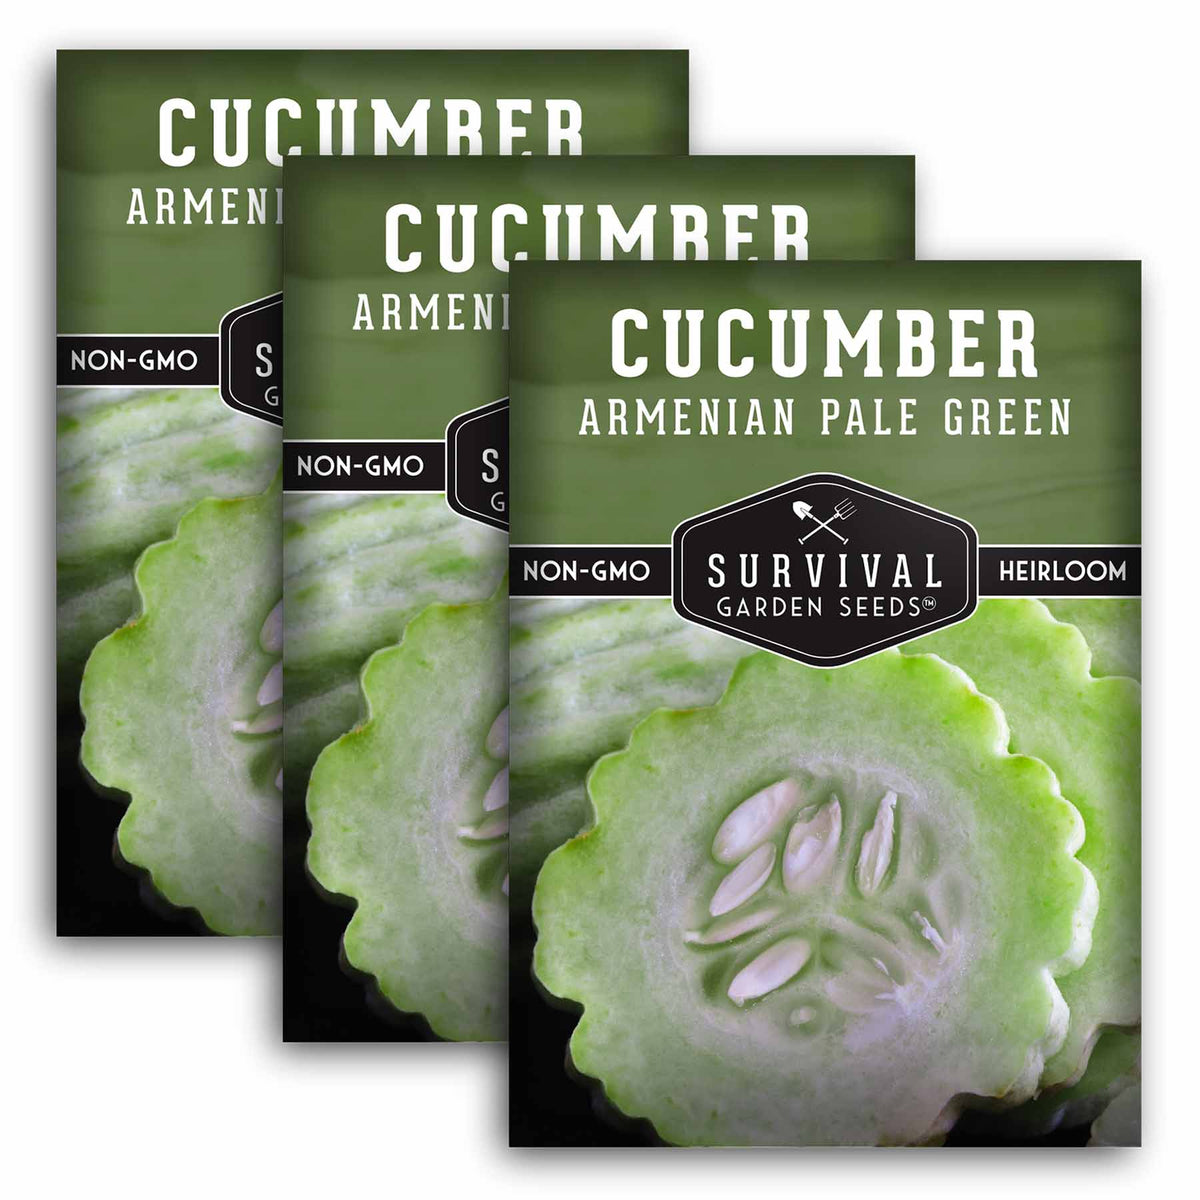 3 packets of Armenian Pale Green Cucumber seeds